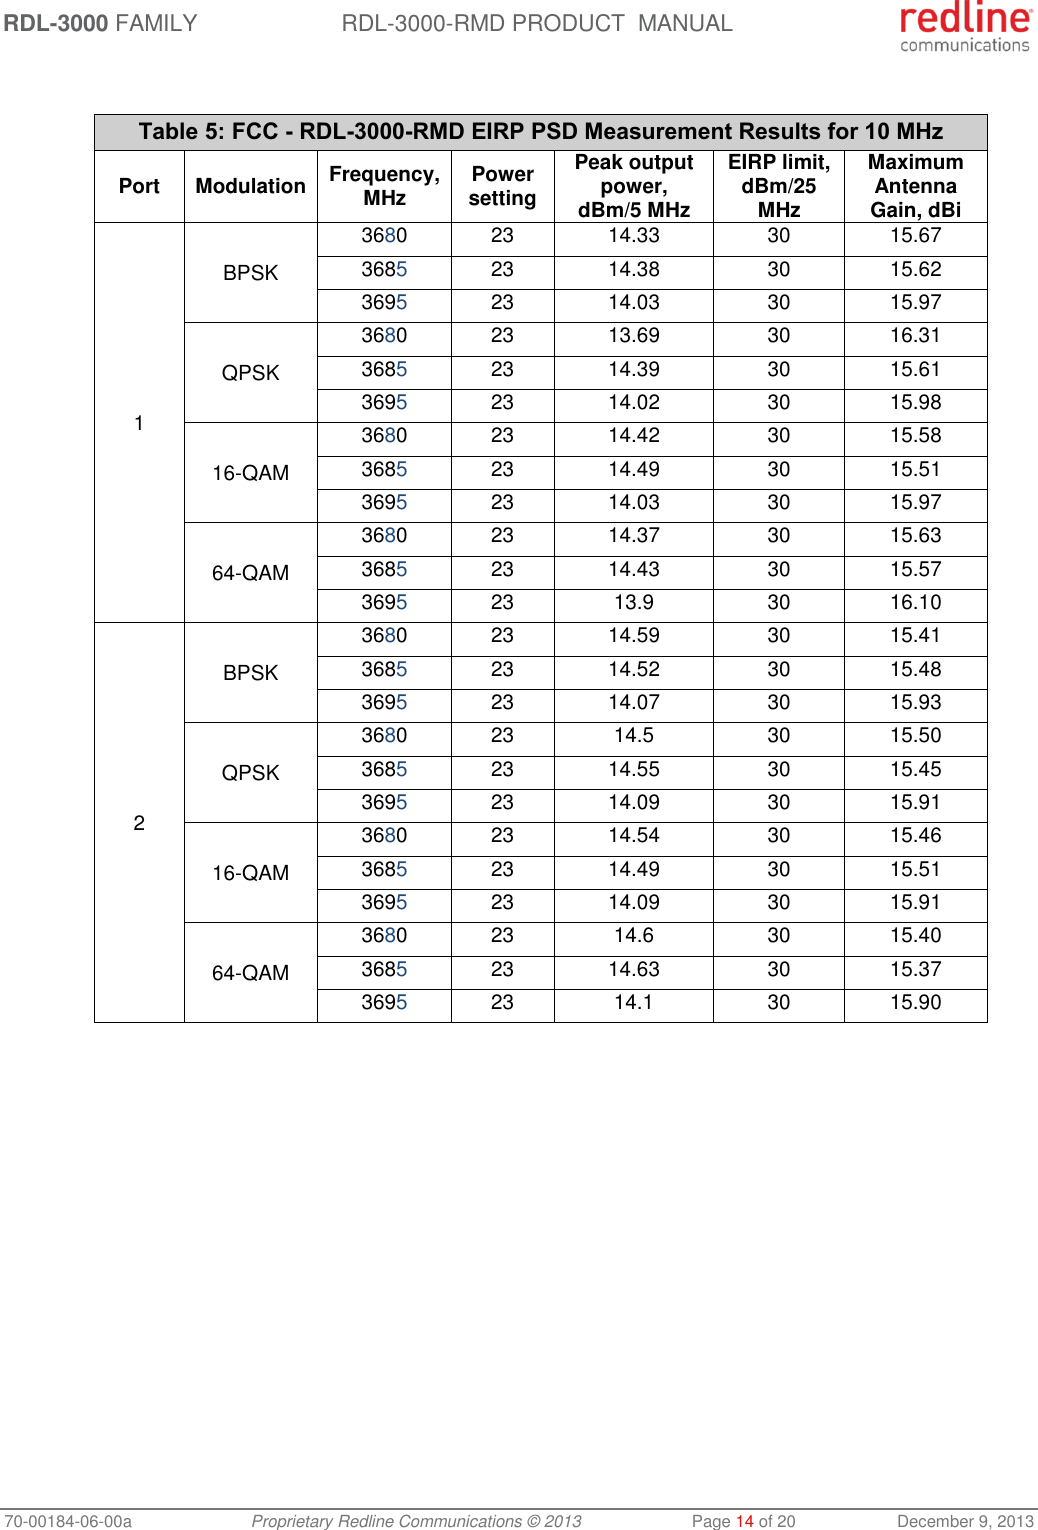 RDL-3000 FAMILY RDL-3000-RMD PRODUCT  MANUAL 70-00184-06-00a  Proprietary Redline Communications © 2013  Page 14 of 20  December 9, 2013  Table 5: FCC - RDL-3000-RMD EIRP PSD Measurement Results for 10 MHz Port Modulation Frequency, MHz Power setting Peak output power, dBm/5 MHz EIRP limit, dBm/25 MHz Maximum Antenna Gain, dBi 1 BPSK 3680 23 14.33 30 15.67 3685 23 14.38 30 15.62 3695 23 14.03 30 15.97 QPSK 3680 23 13.69 30 16.31 3685 23 14.39 30 15.61 3695 23 14.02 30 15.98 16-QAM 3680 23 14.42 30 15.58 3685 23 14.49 30 15.51 3695 23 14.03 30 15.97 64-QAM 3680 23 14.37 30 15.63 3685 23 14.43 30 15.57 3695 23 13.9 30 16.10 2 BPSK 3680 23 14.59 30 15.41 3685 23 14.52 30 15.48 3695 23 14.07 30 15.93 QPSK 3680 23 14.5 30 15.50 3685 23 14.55 30 15.45 3695 23 14.09 30 15.91 16-QAM 3680 23 14.54 30 15.46 3685 23 14.49 30 15.51 3695 23 14.09 30 15.91 64-QAM 3680 23 14.6 30 15.40 3685 23 14.63 30 15.37 3695 23 14.1 30 15.90  